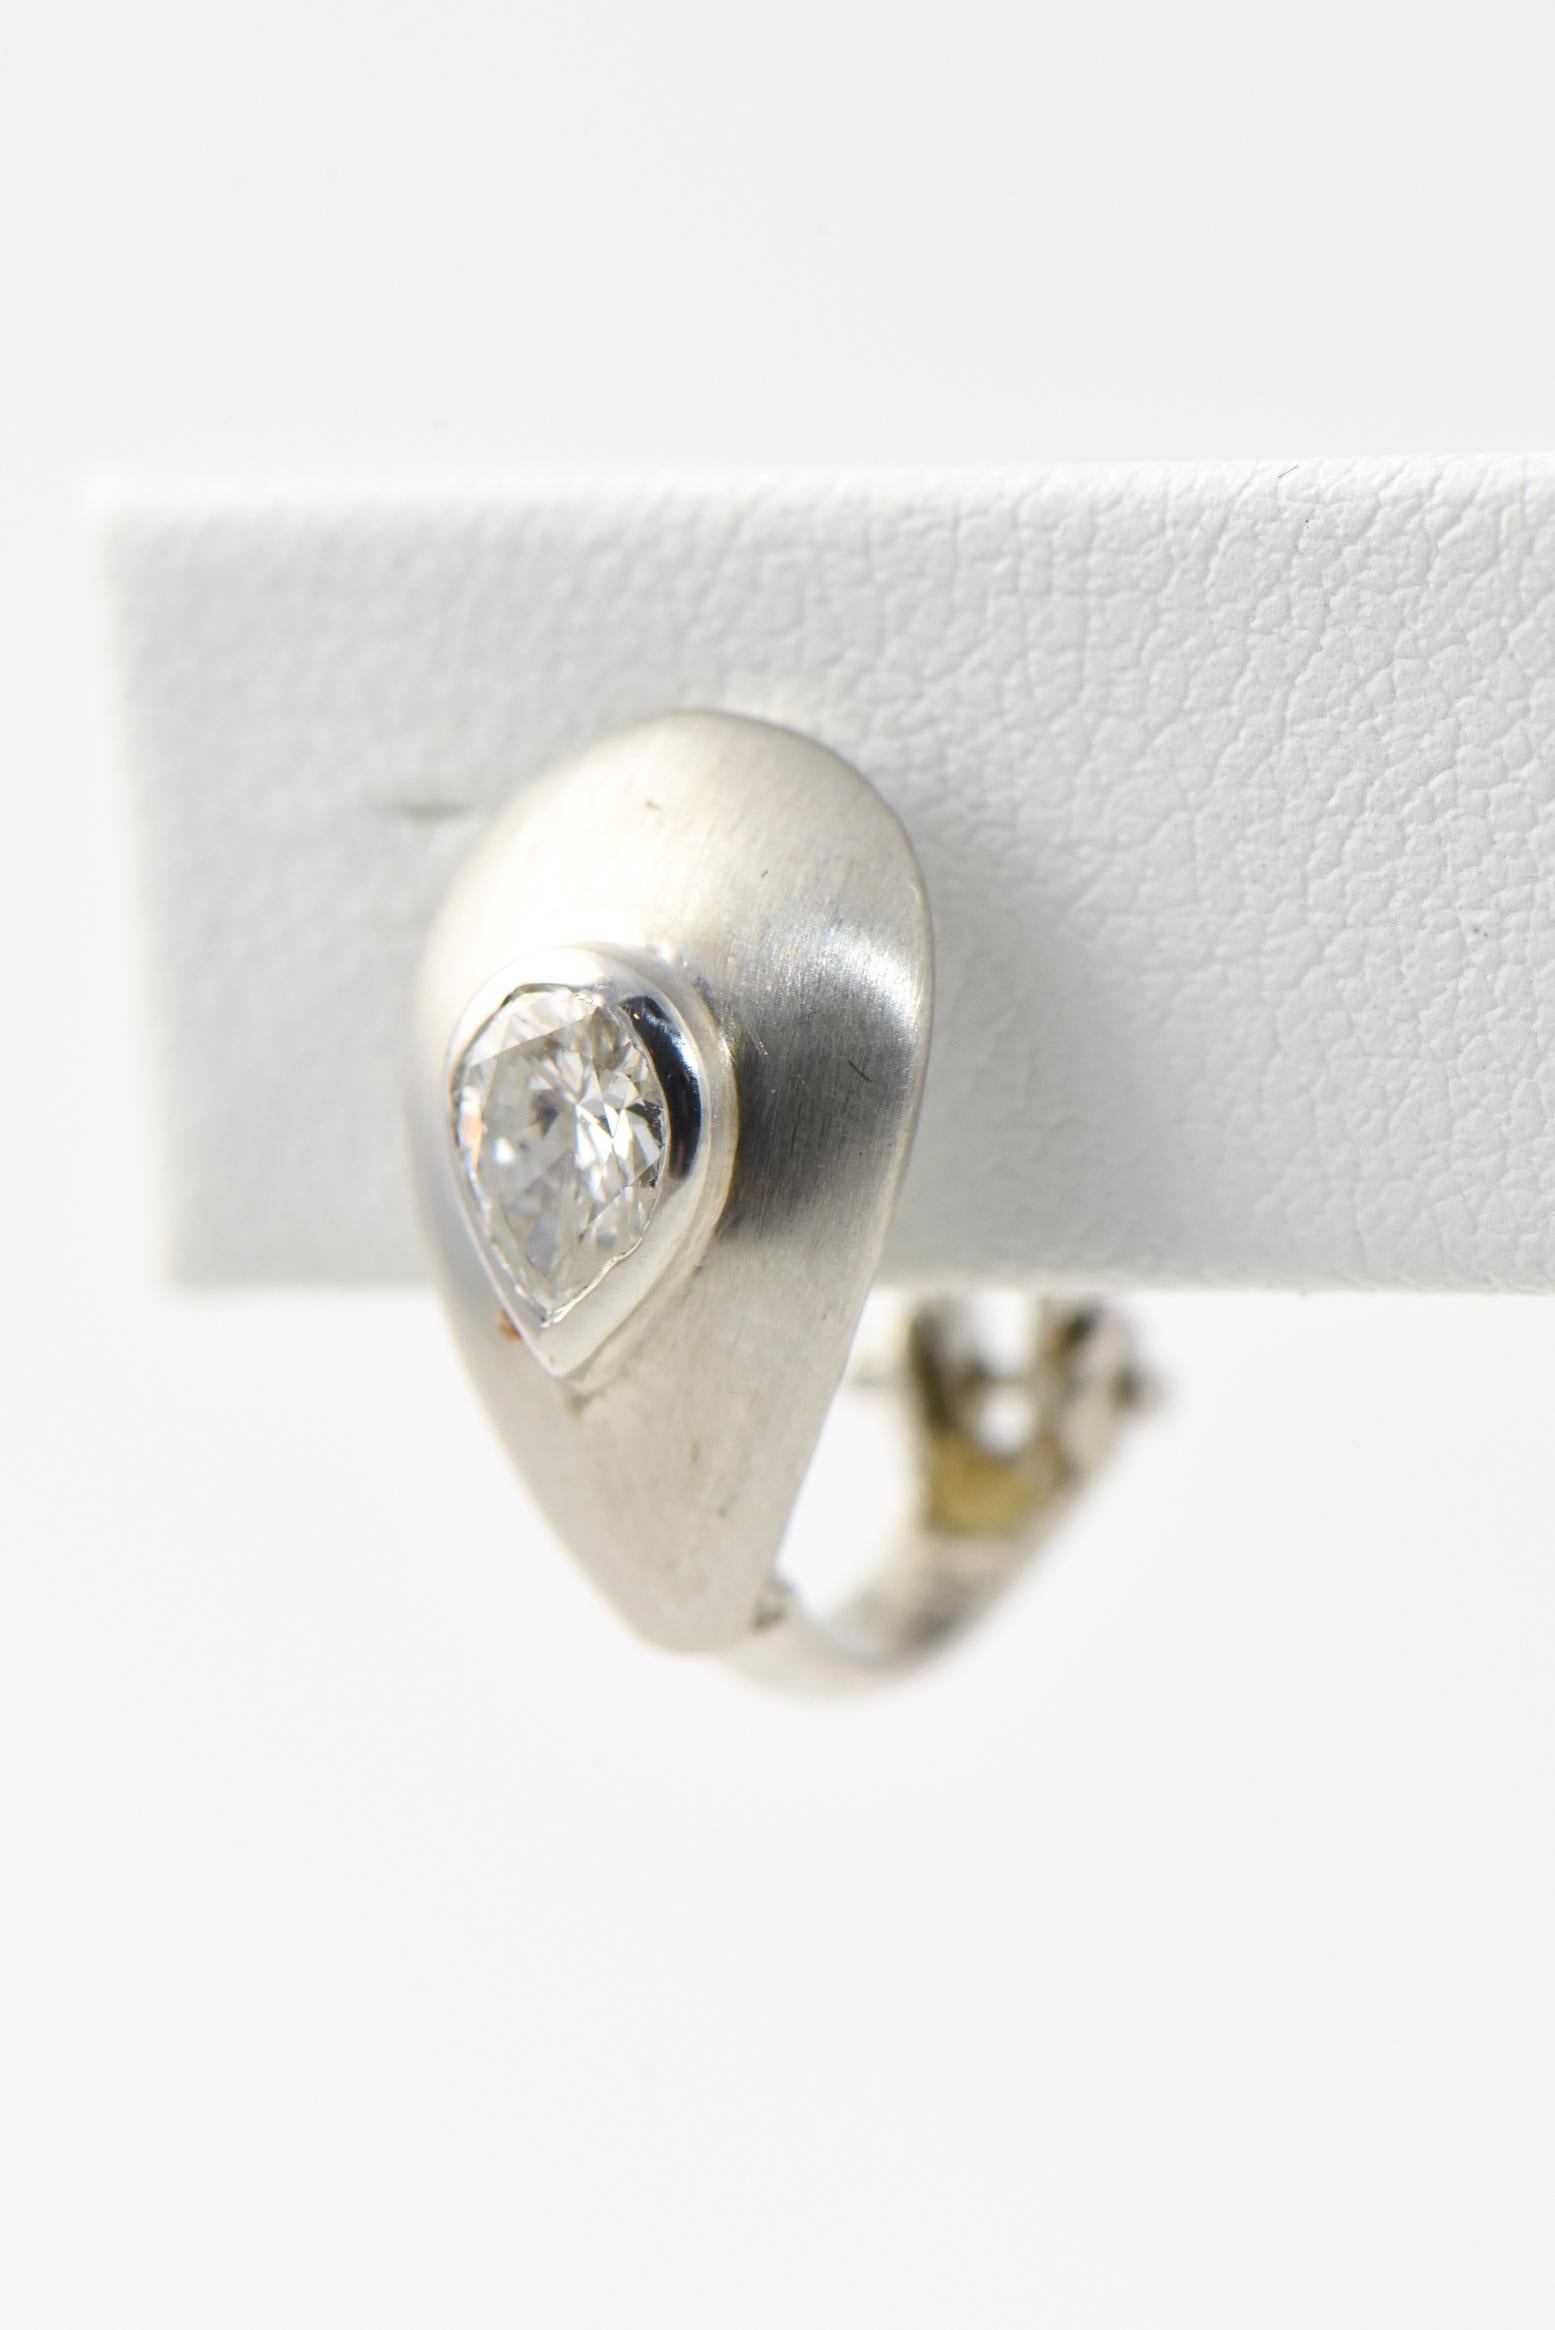 Brushed 14K white gold teardrop earrings with a bezel-set 0.35 carat pear-cut diamond in the center of each. Clip backs. Diamonds: G-H VS2-SI1. Some wear.